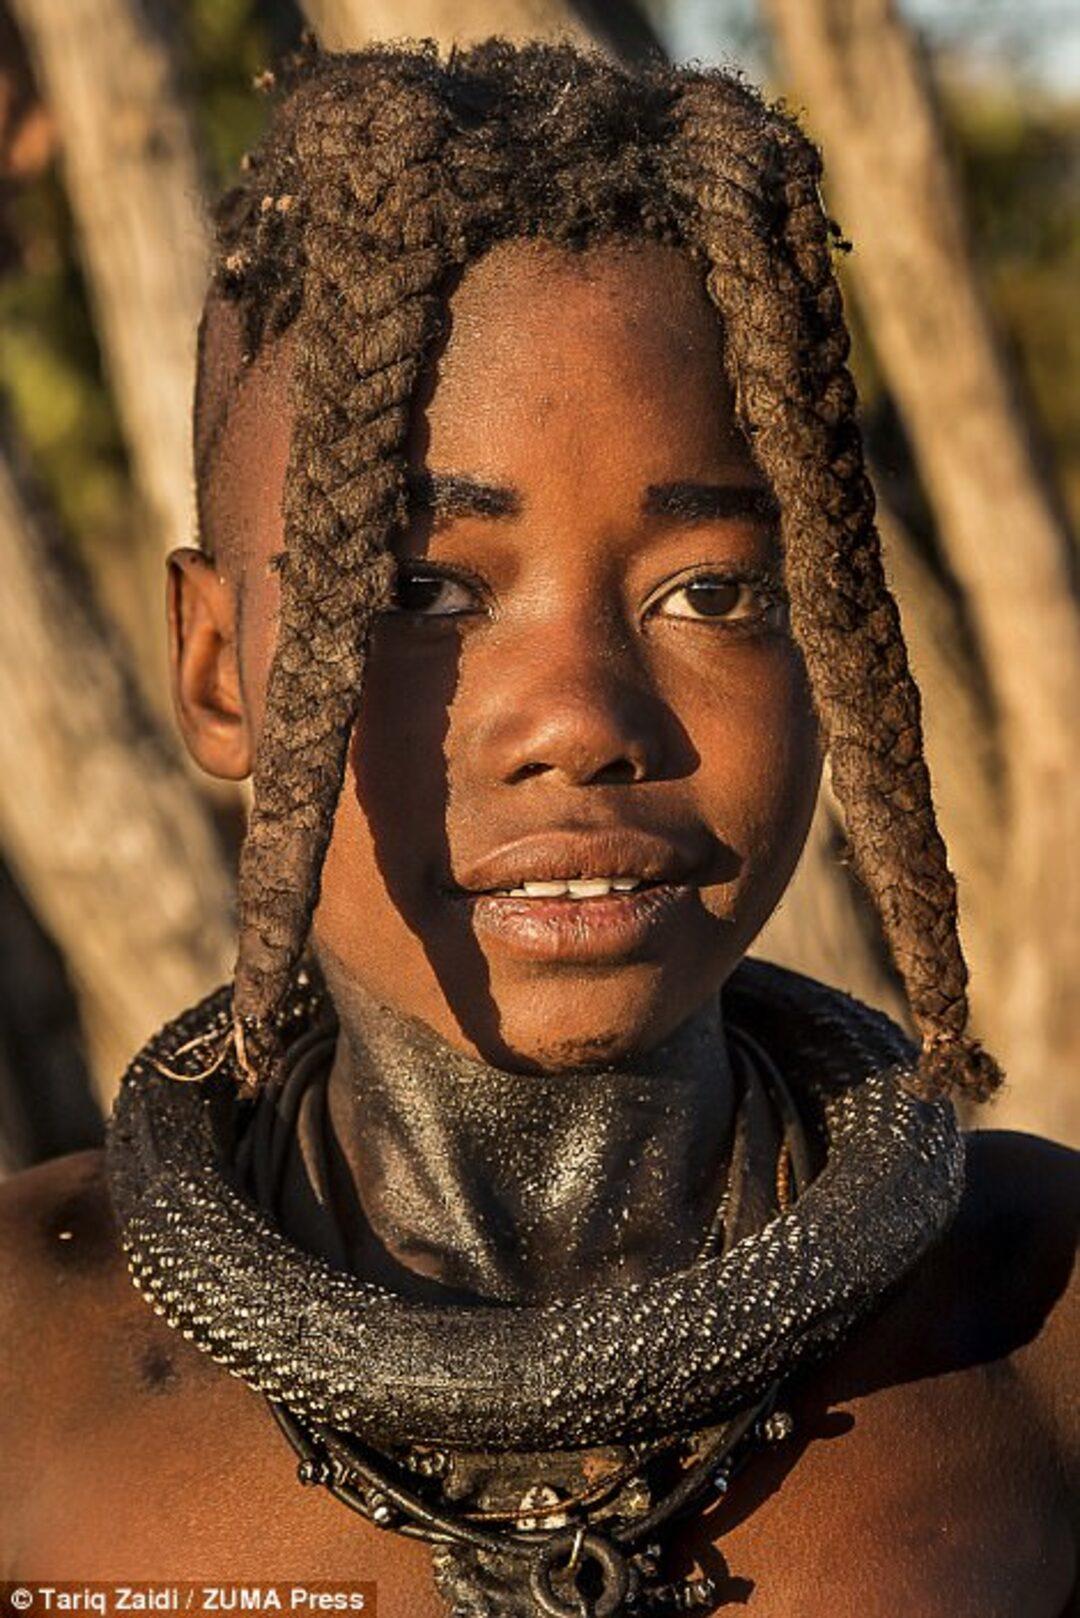 Tribe himba pro. Племя Химба. Племя Химба в Африке. Племя Химба женщины. Мурси, Масаи, бушмены, Химба.